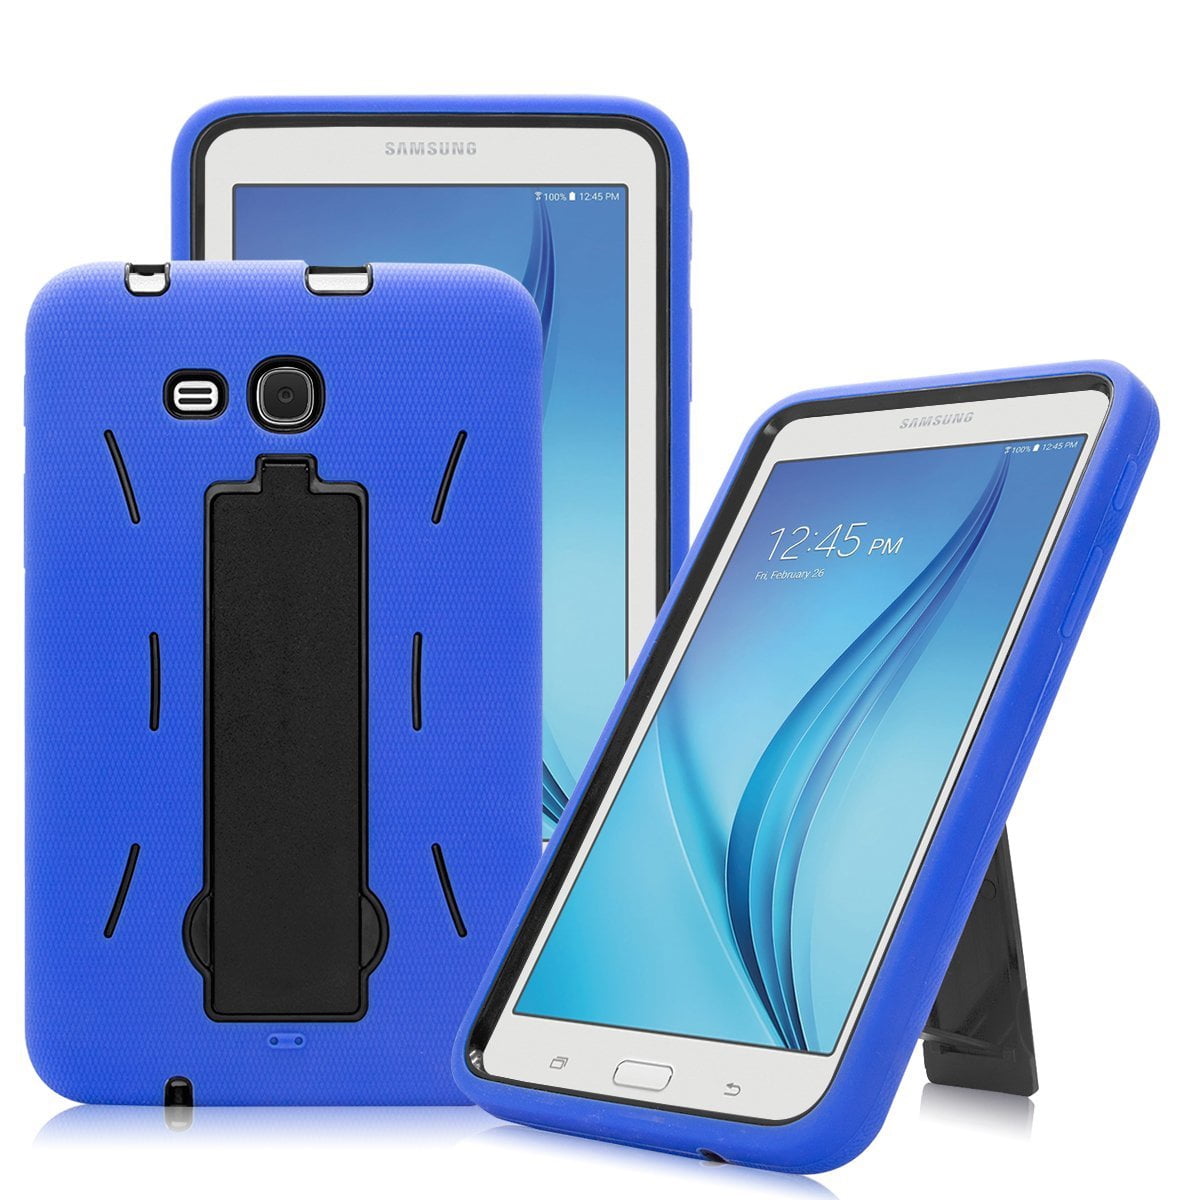 Galaxy E Lite 7.0 Case Galaxy Tab 3 Lite 7.0 Case , Mignova Rugged Heavy Duty Kids Friendly Case For Samsung Galaxy E Lite 7.0 Tab 3 Lite